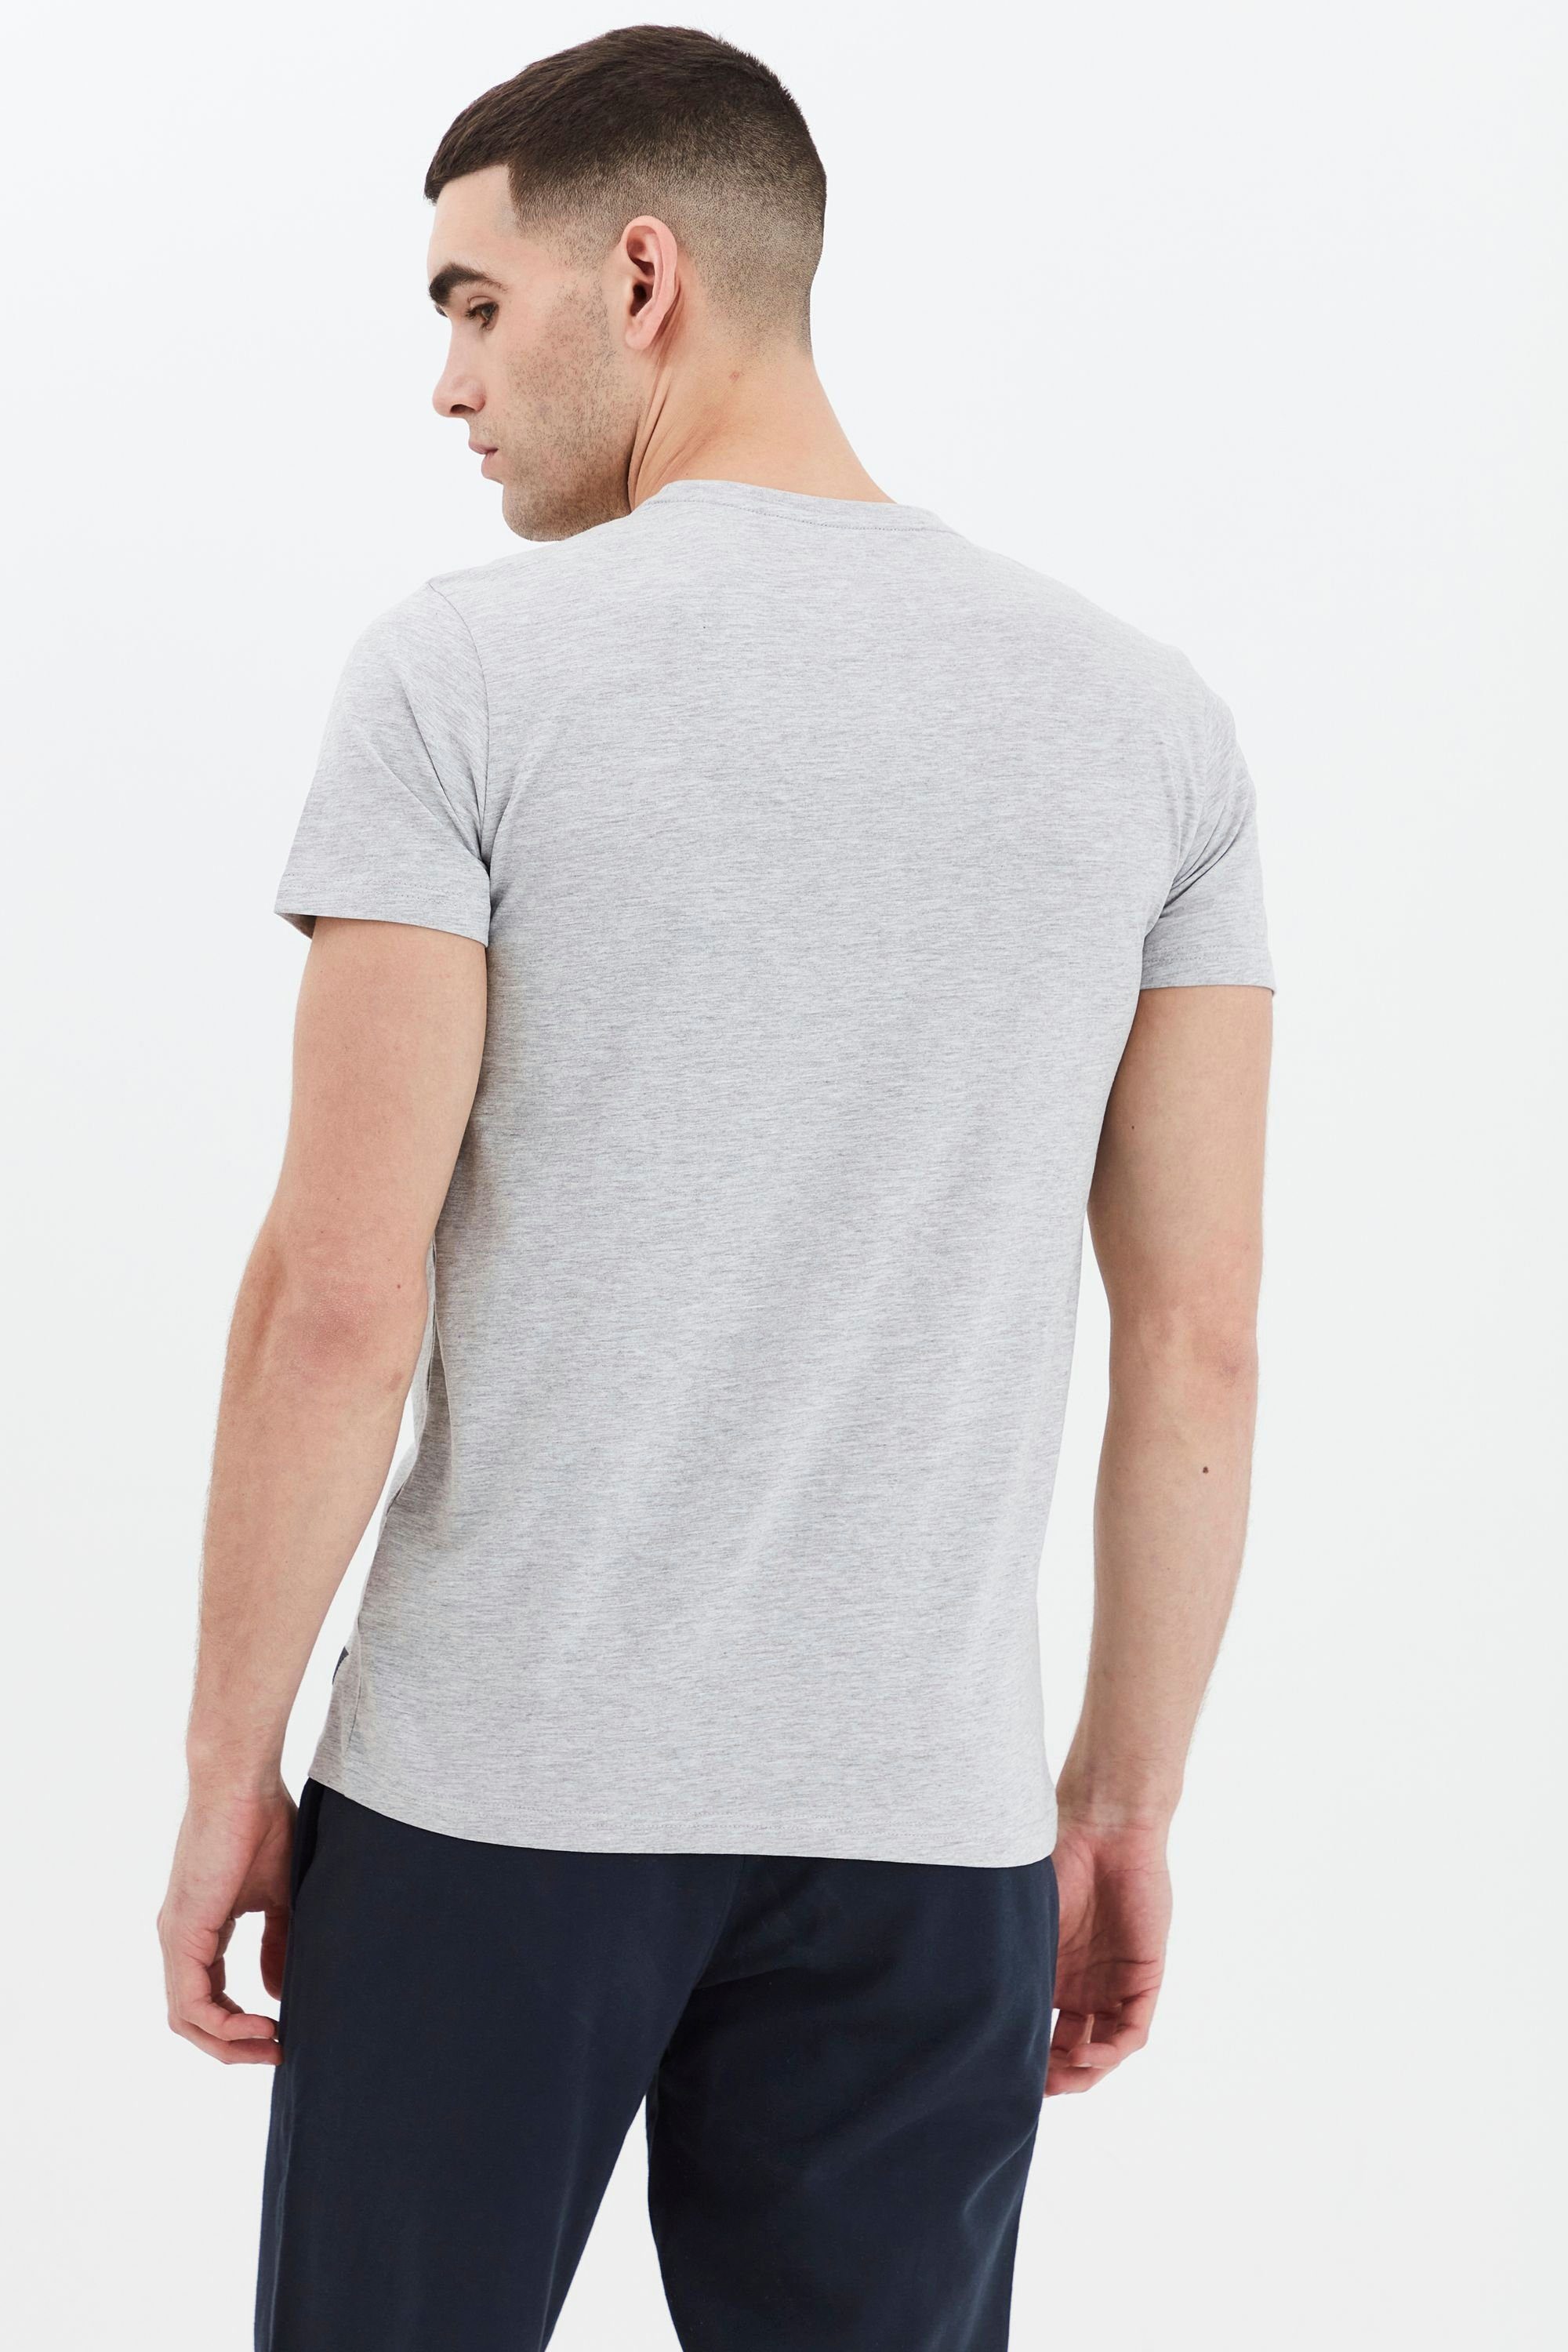 Print-Shirt mit Print SDPedro Light Grey Melange (1541011) T-Shirt !Solid